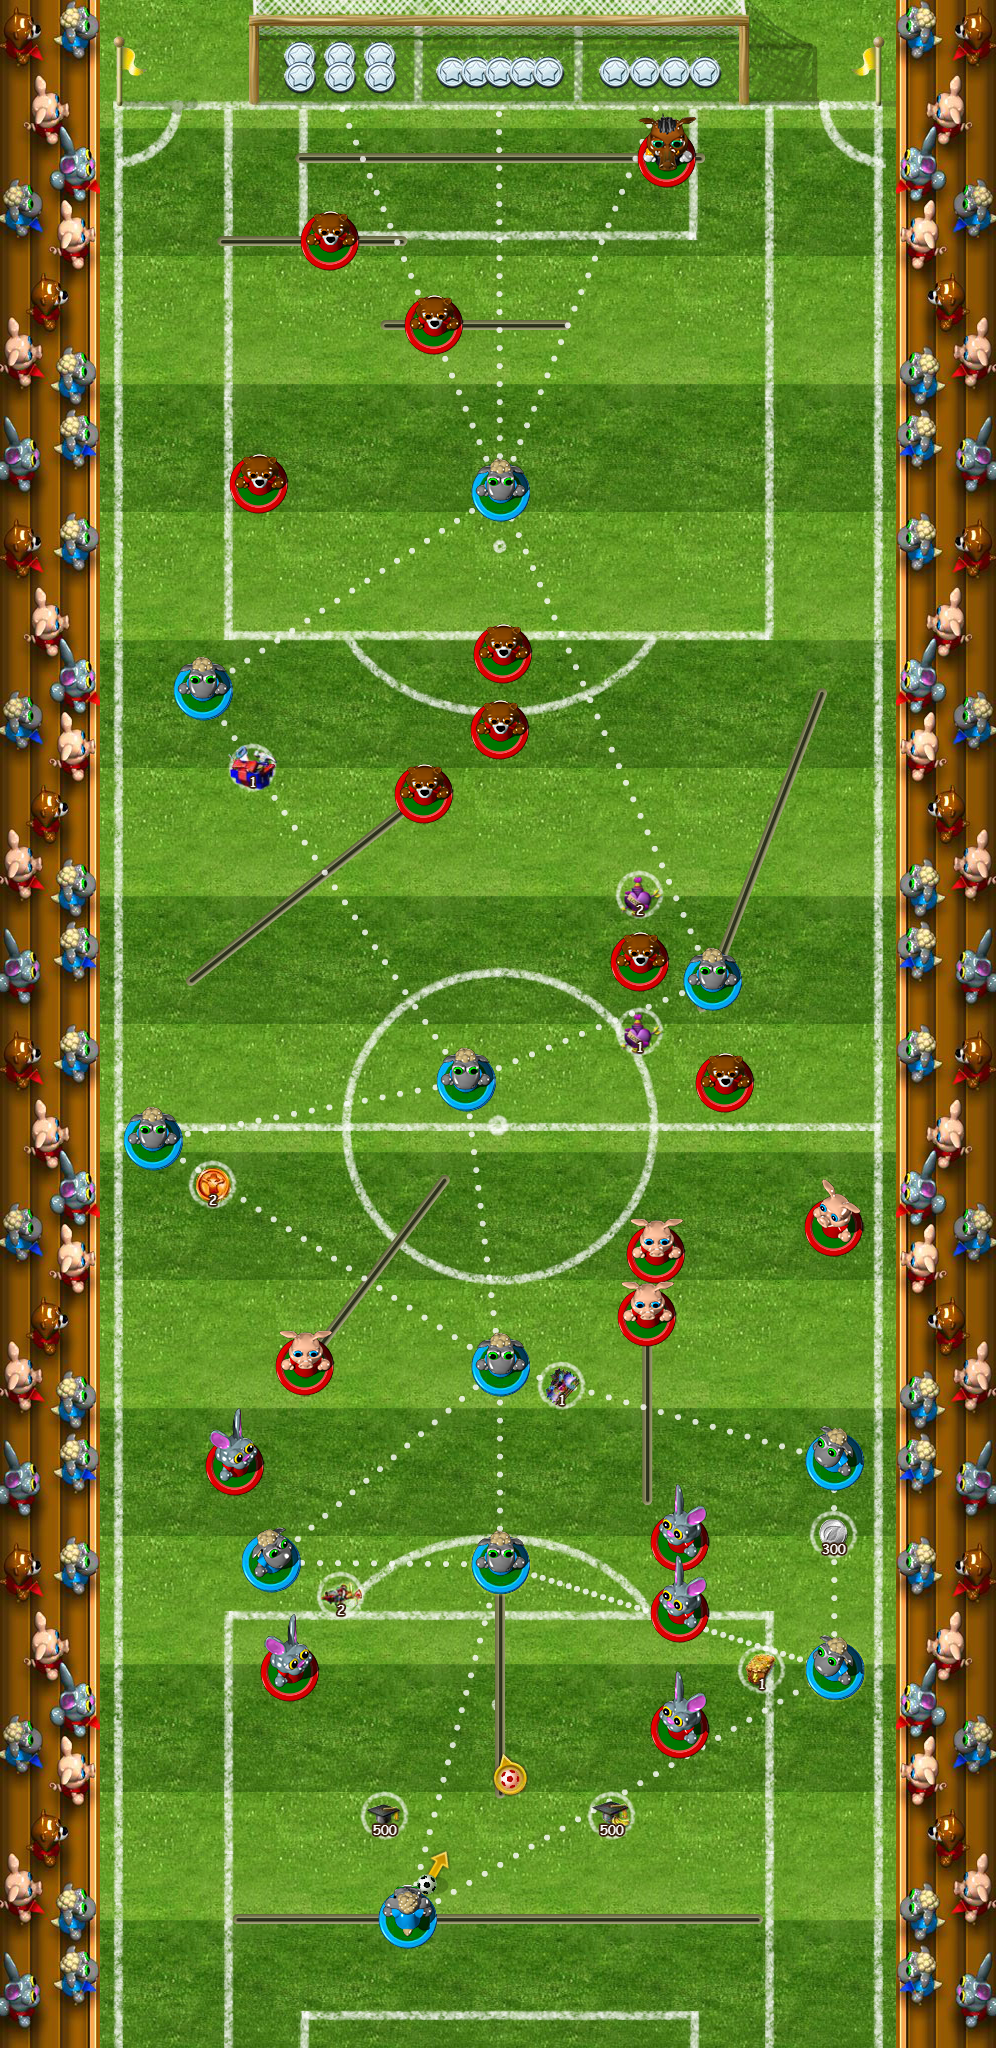 soccerjul2019_layout5.png